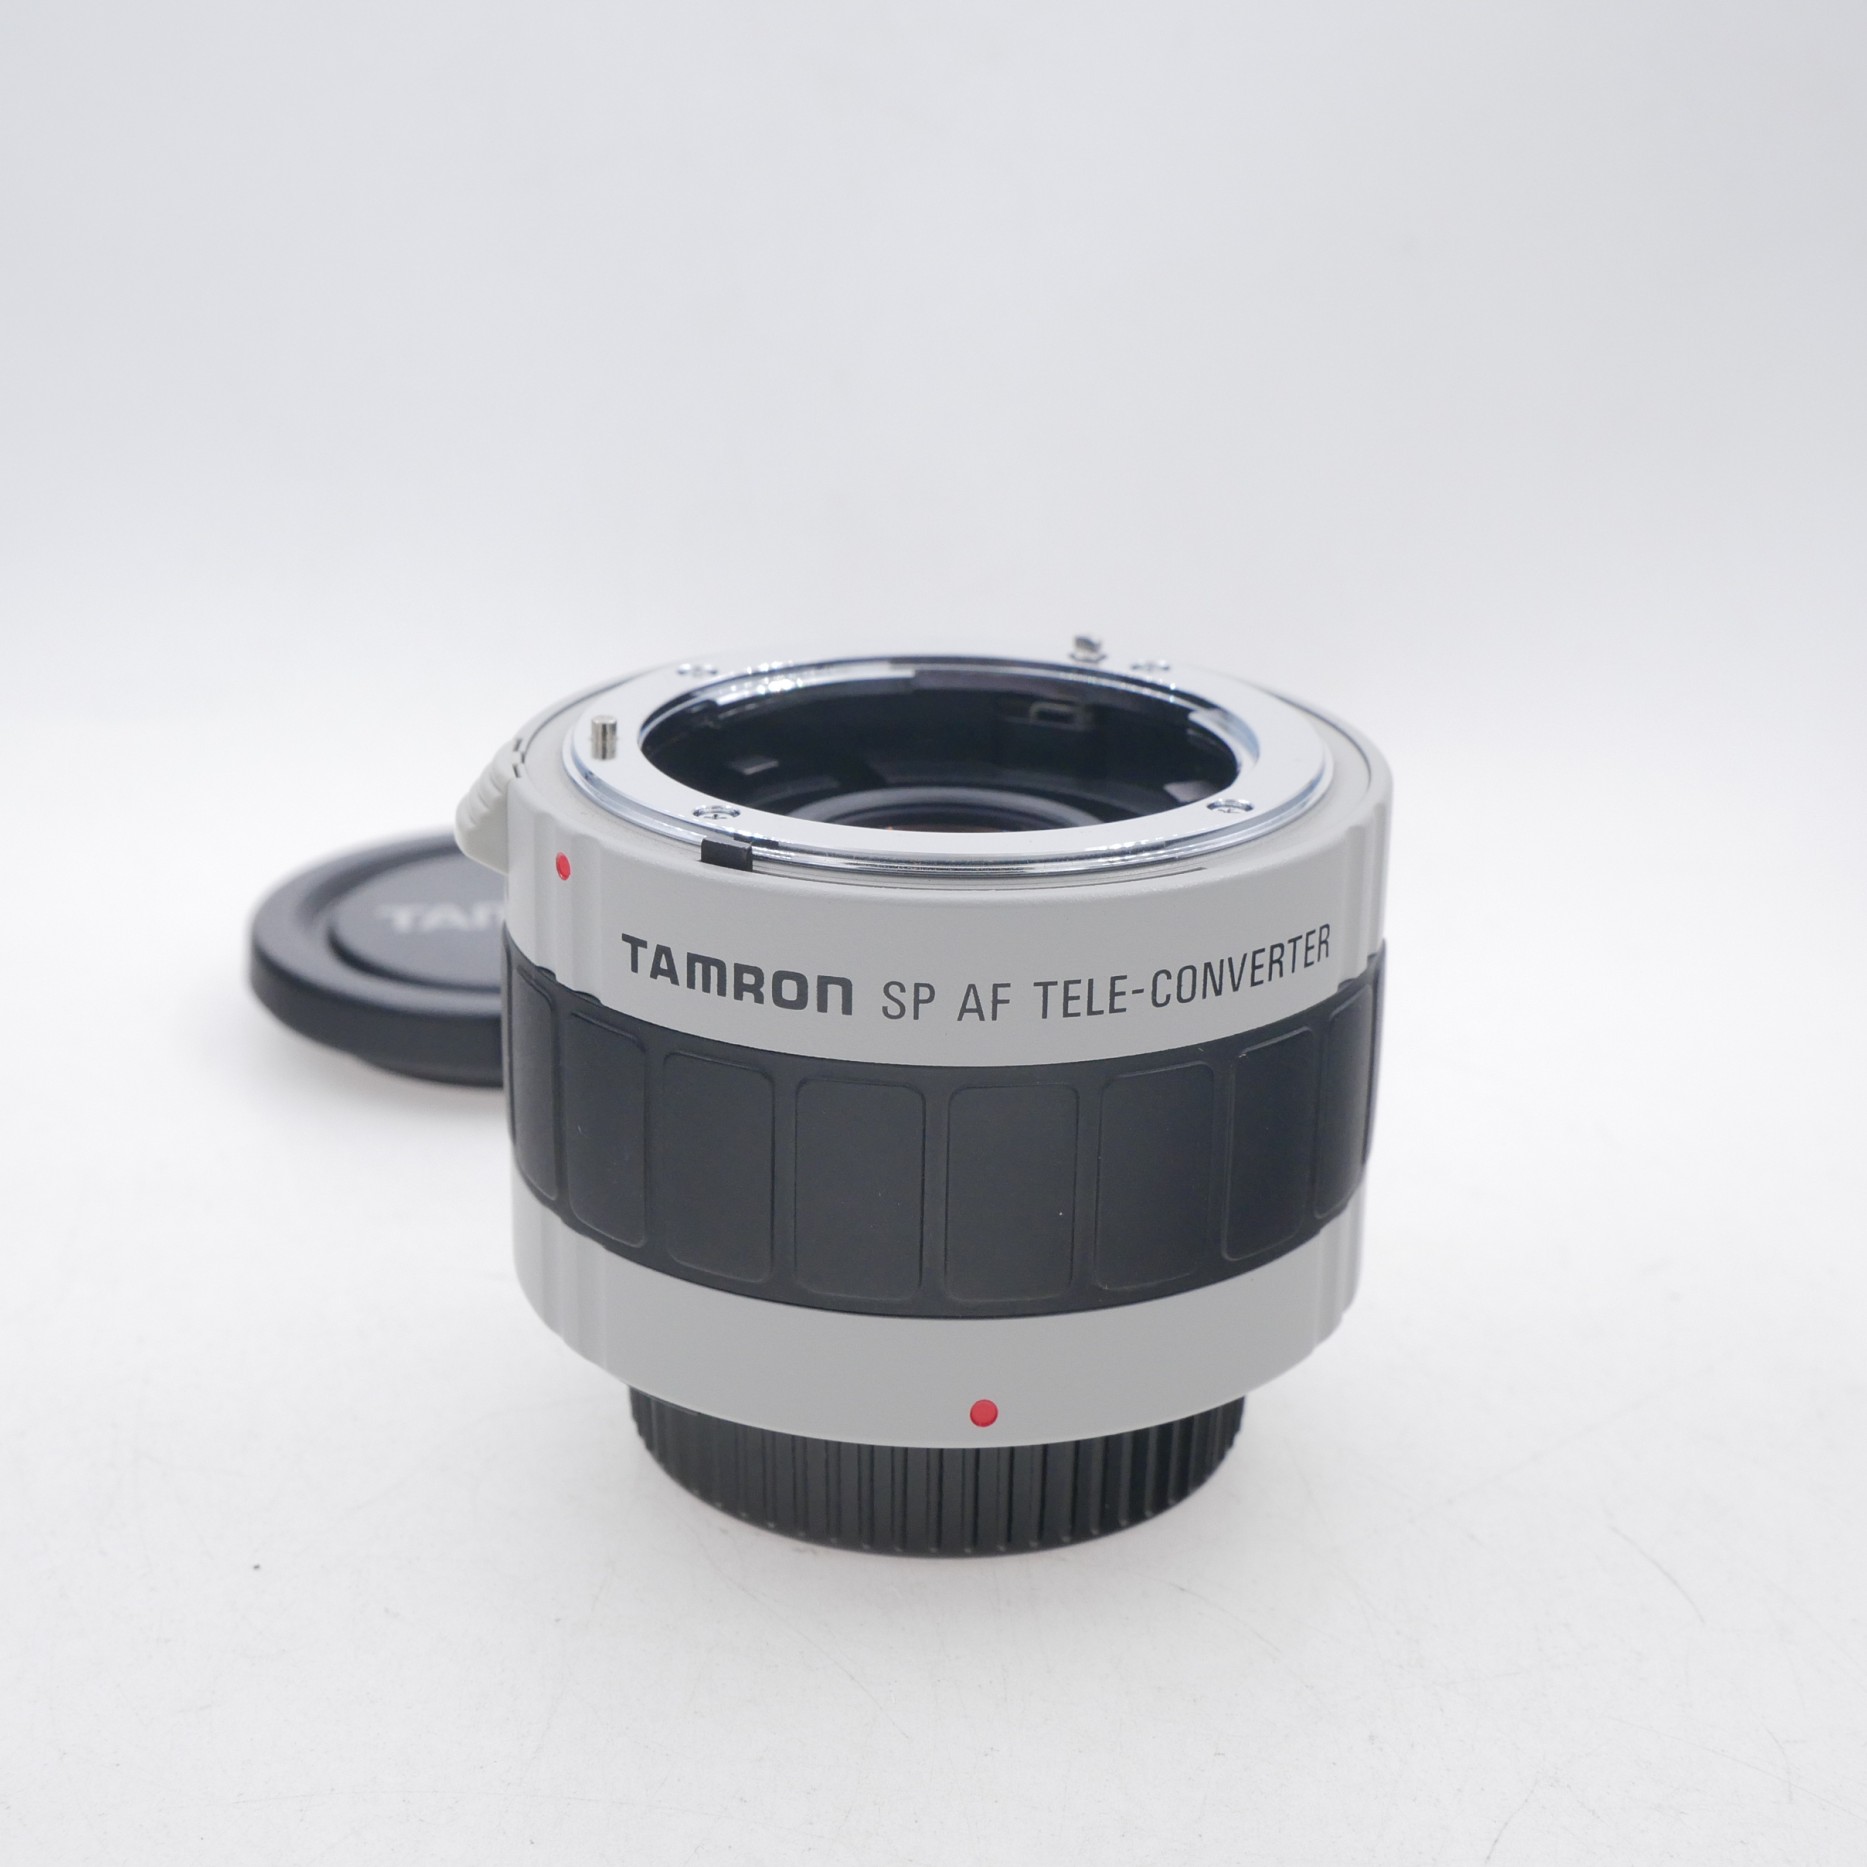 Tamron 2x SP AF Tele-Converter (7E) in Nikon Mount